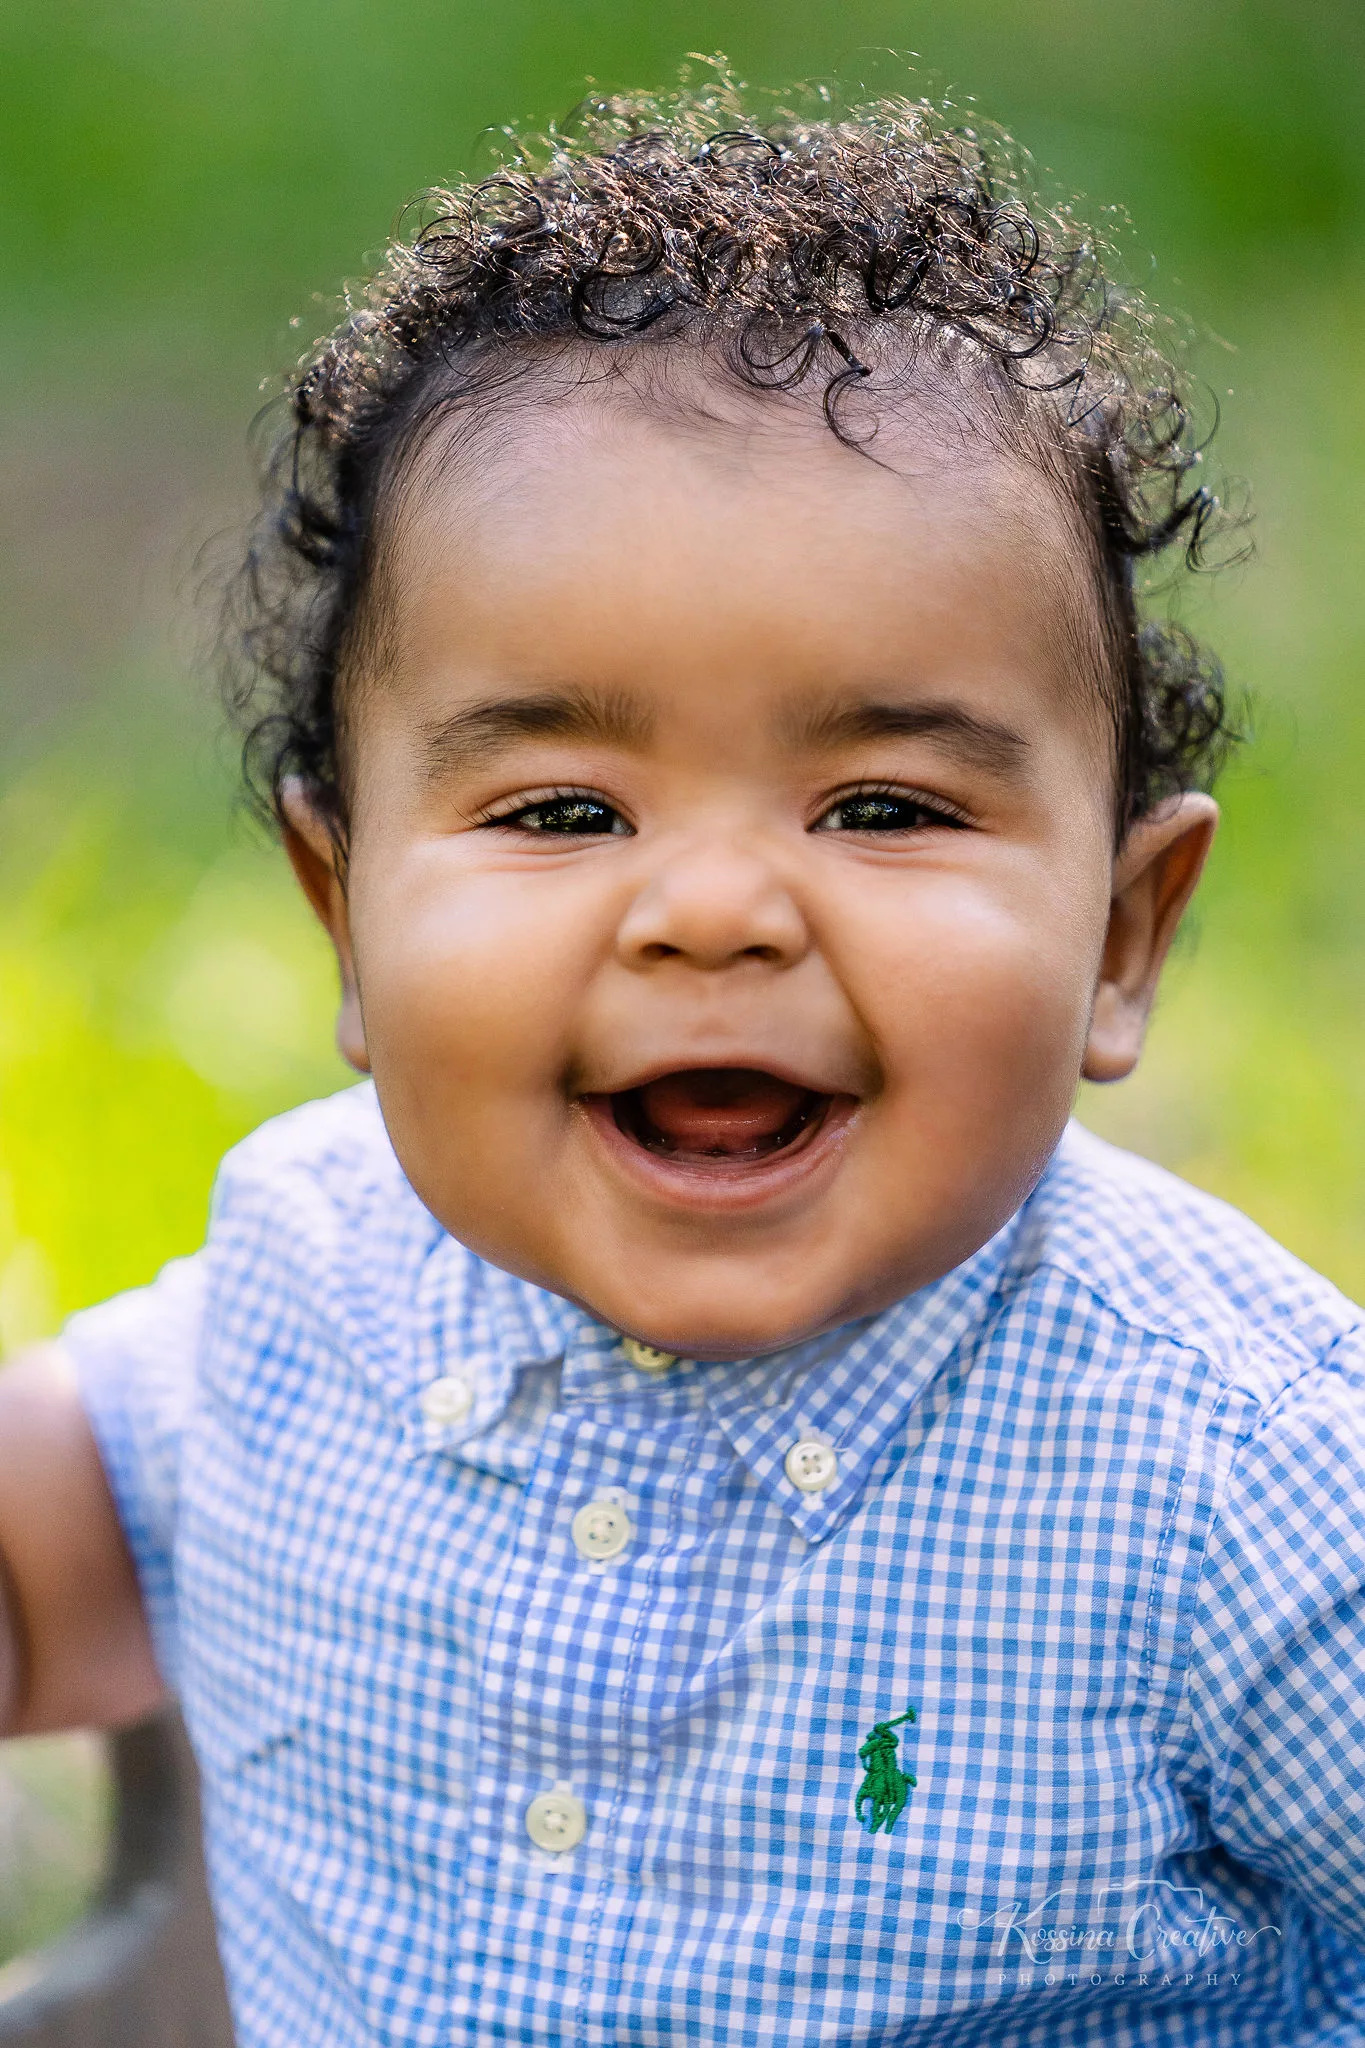 Orlando Baby Photographer 6 month sitter milestone outside baby boy